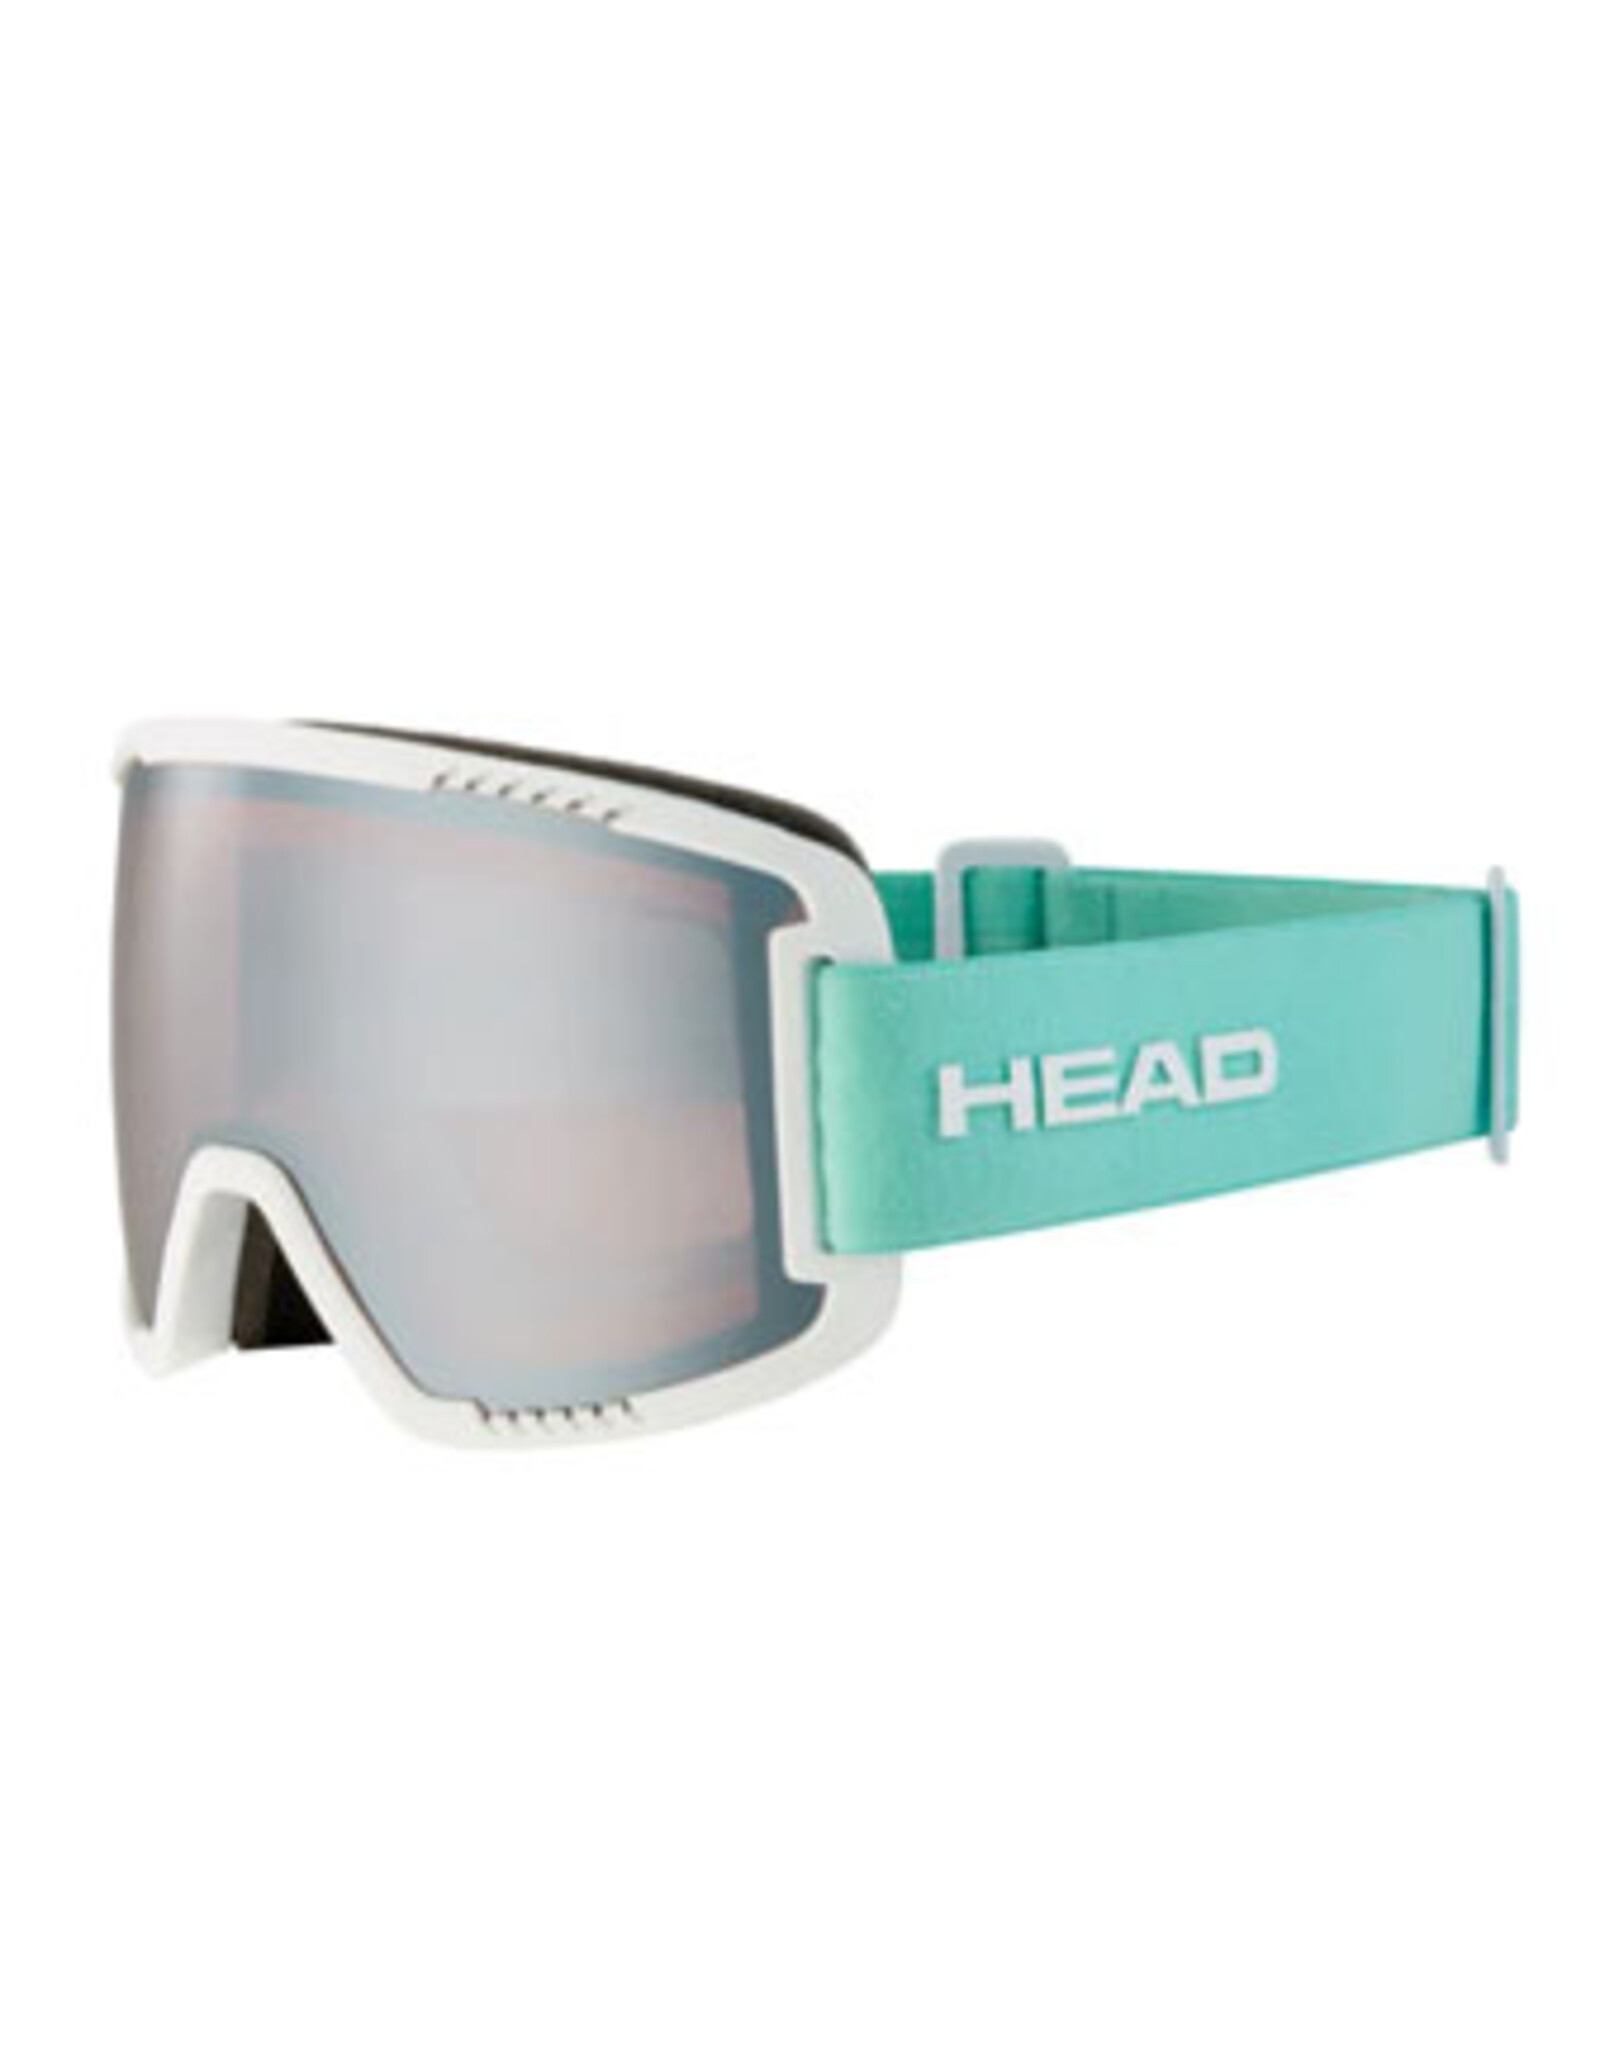 Head Head Contex  Silver/Turquoise F22